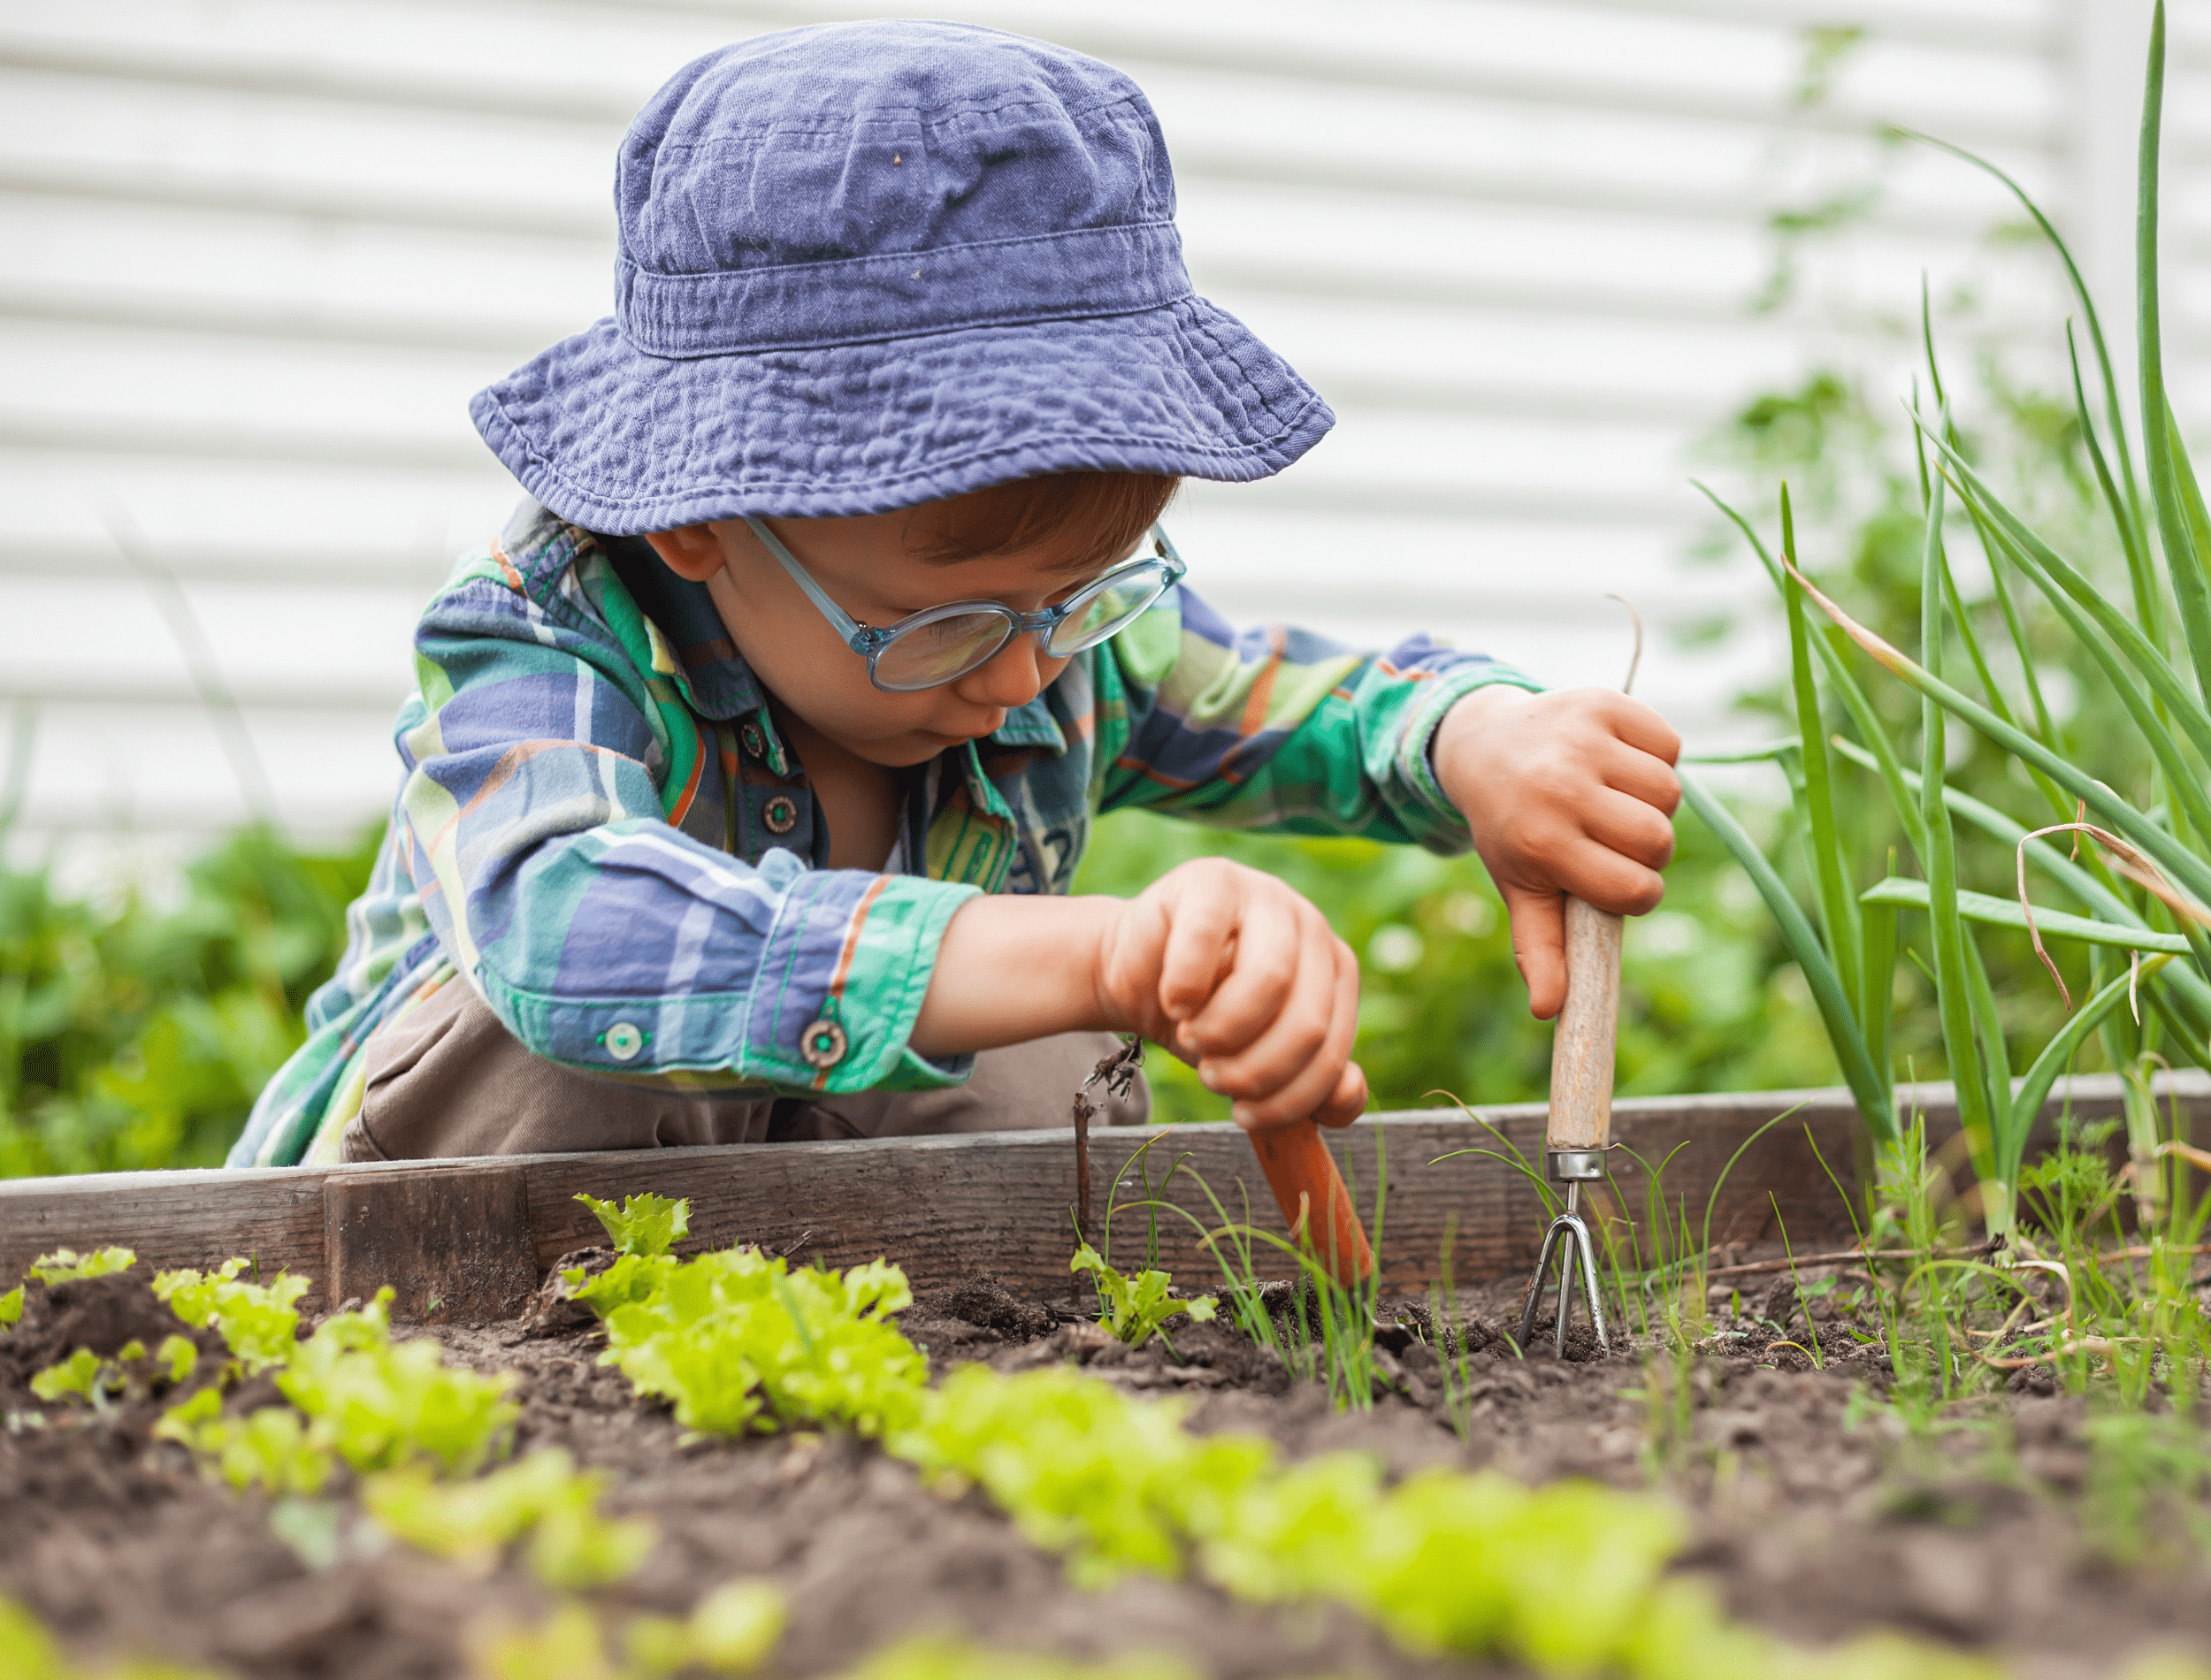 Child Gardening in Vegetable Garden in the Backyard